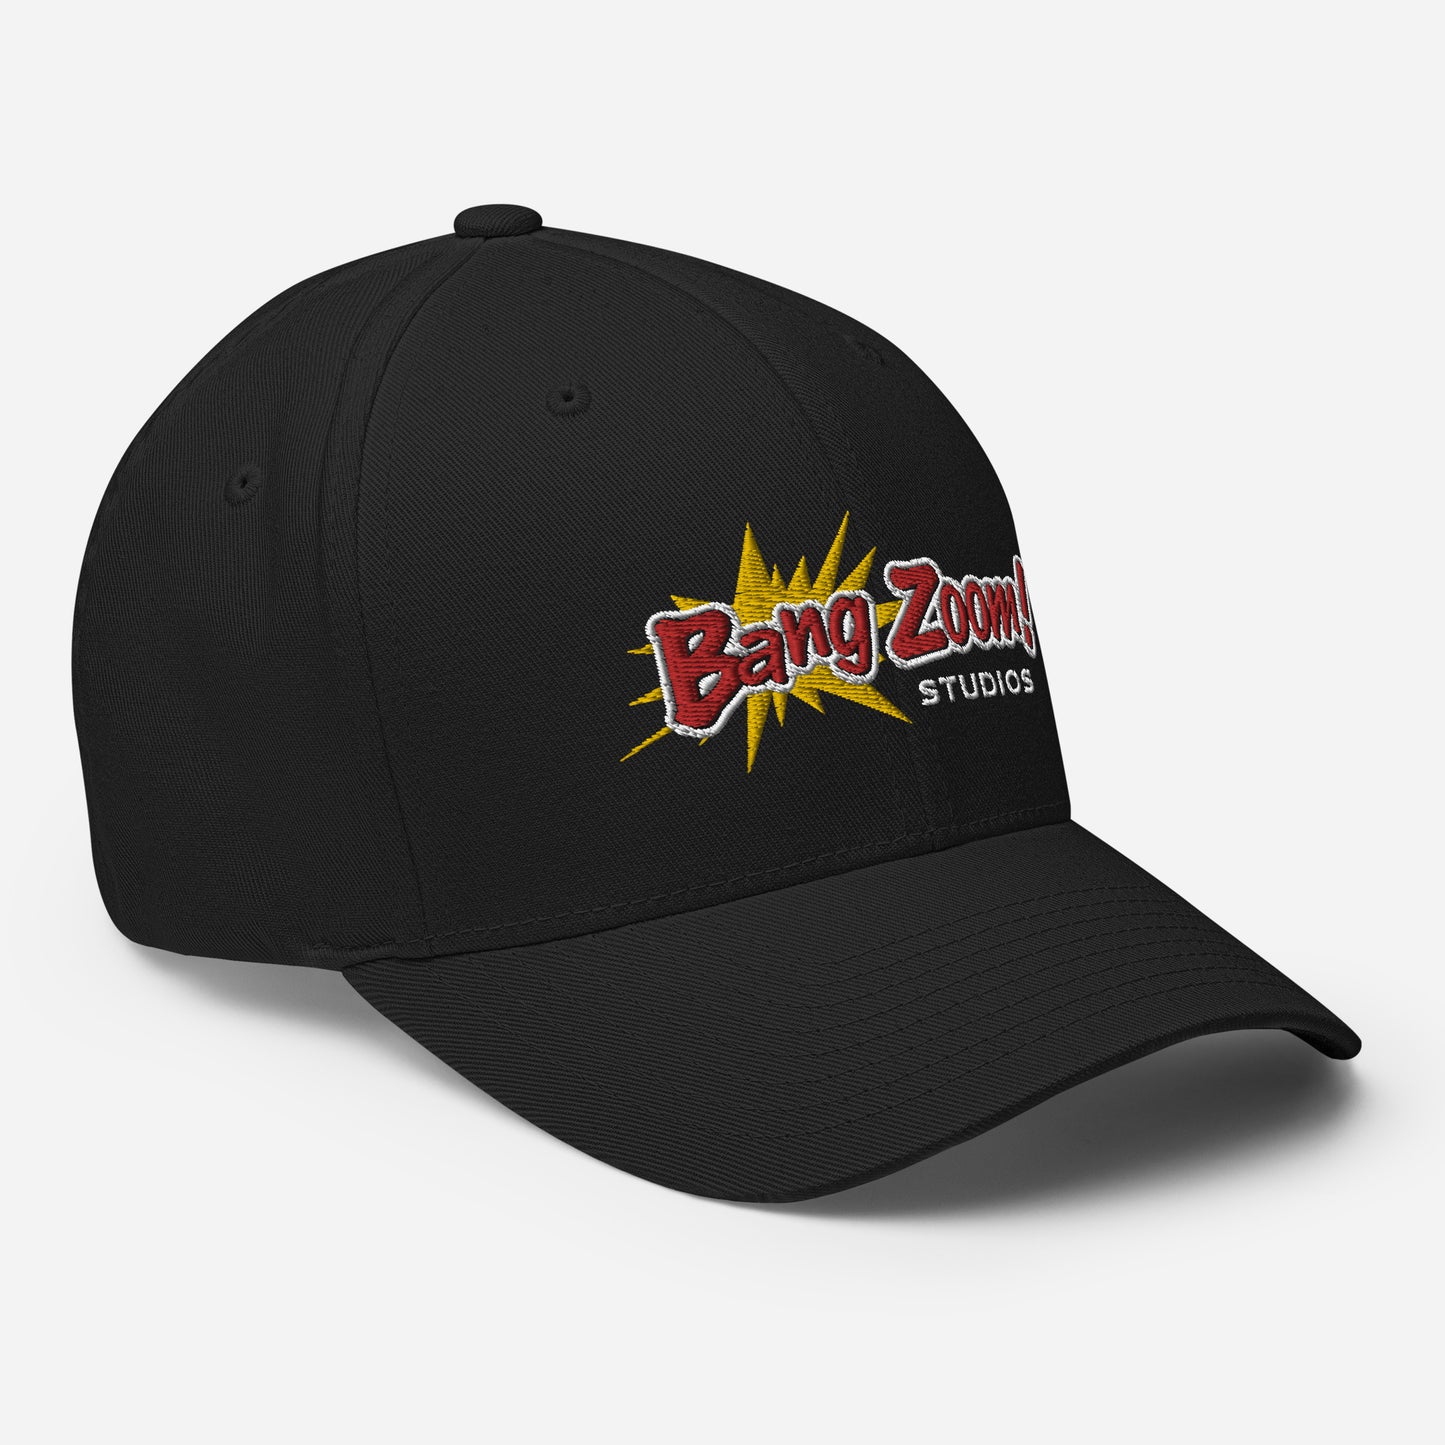 Bang Zoom! Color Logo on Black Flexfit Cap